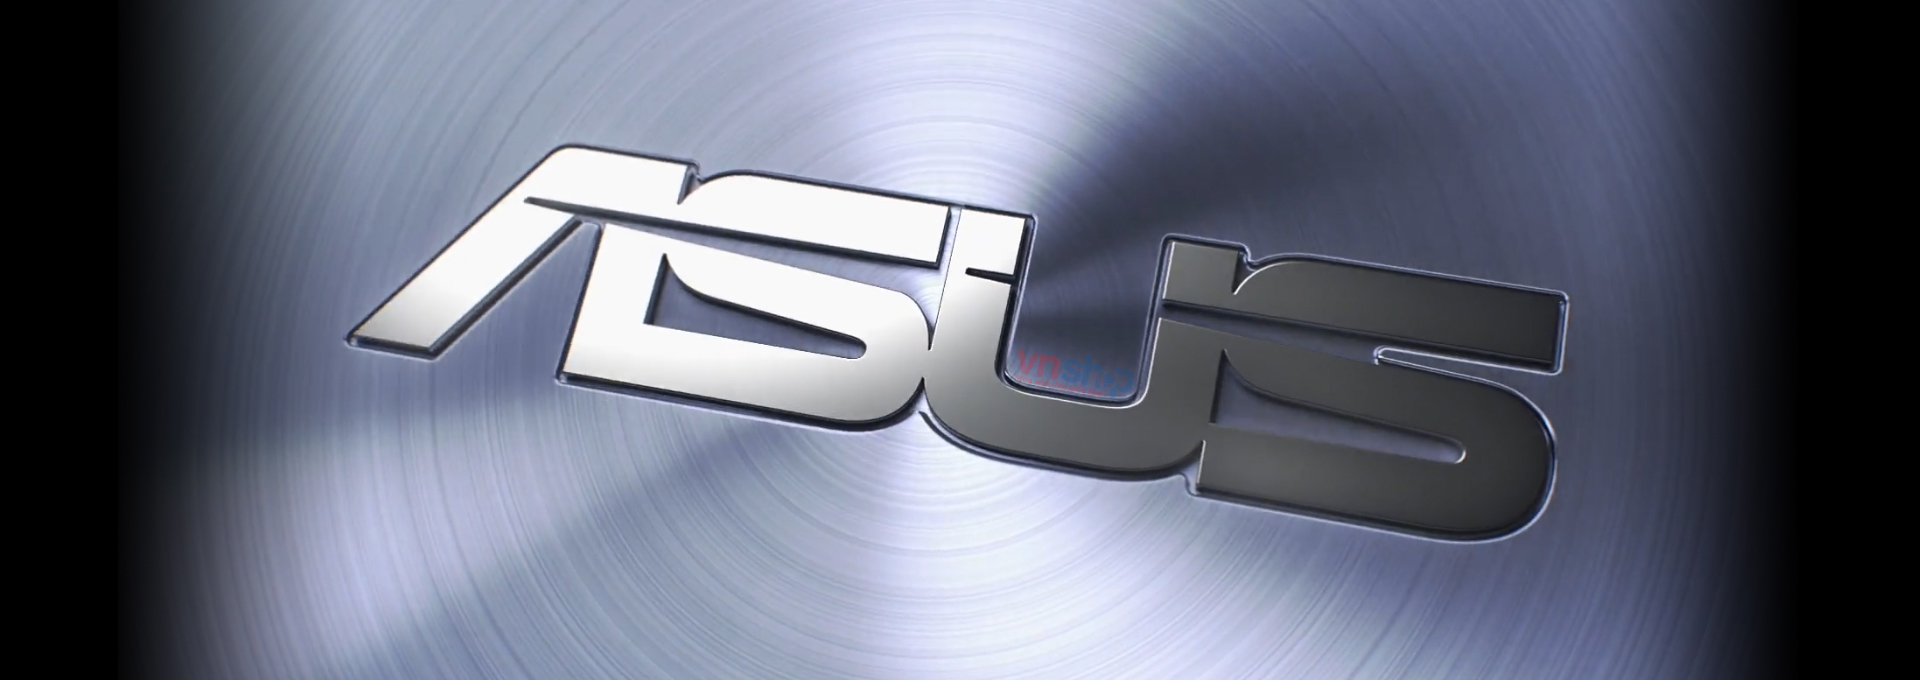 ZenBeam S2 ASUS-logo trên máy chiếu